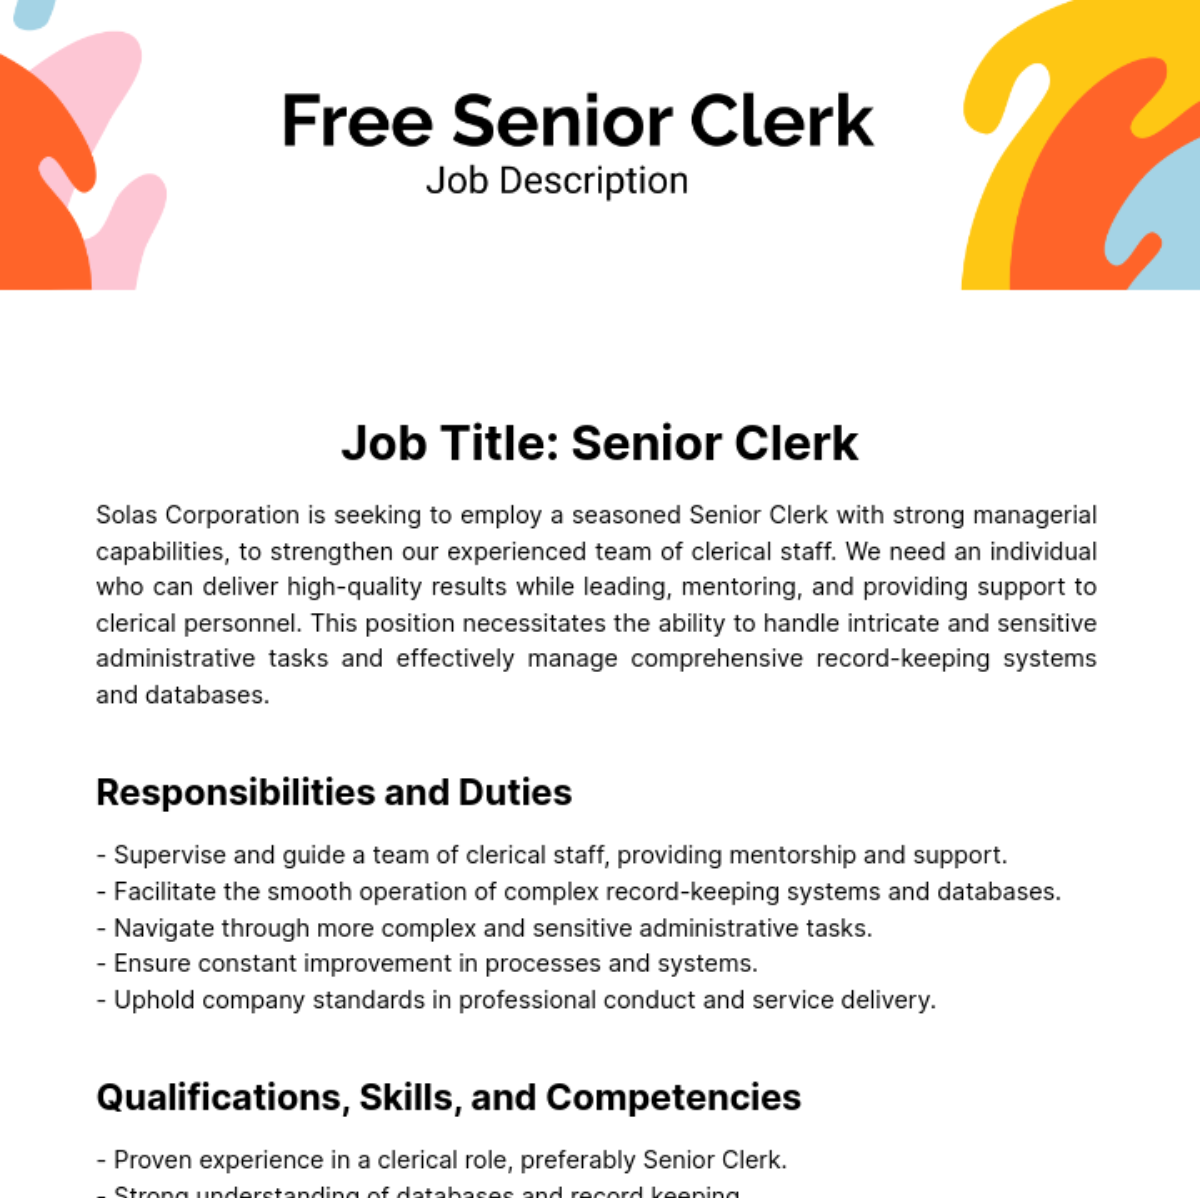 Free Senior Clerk Job Description Template